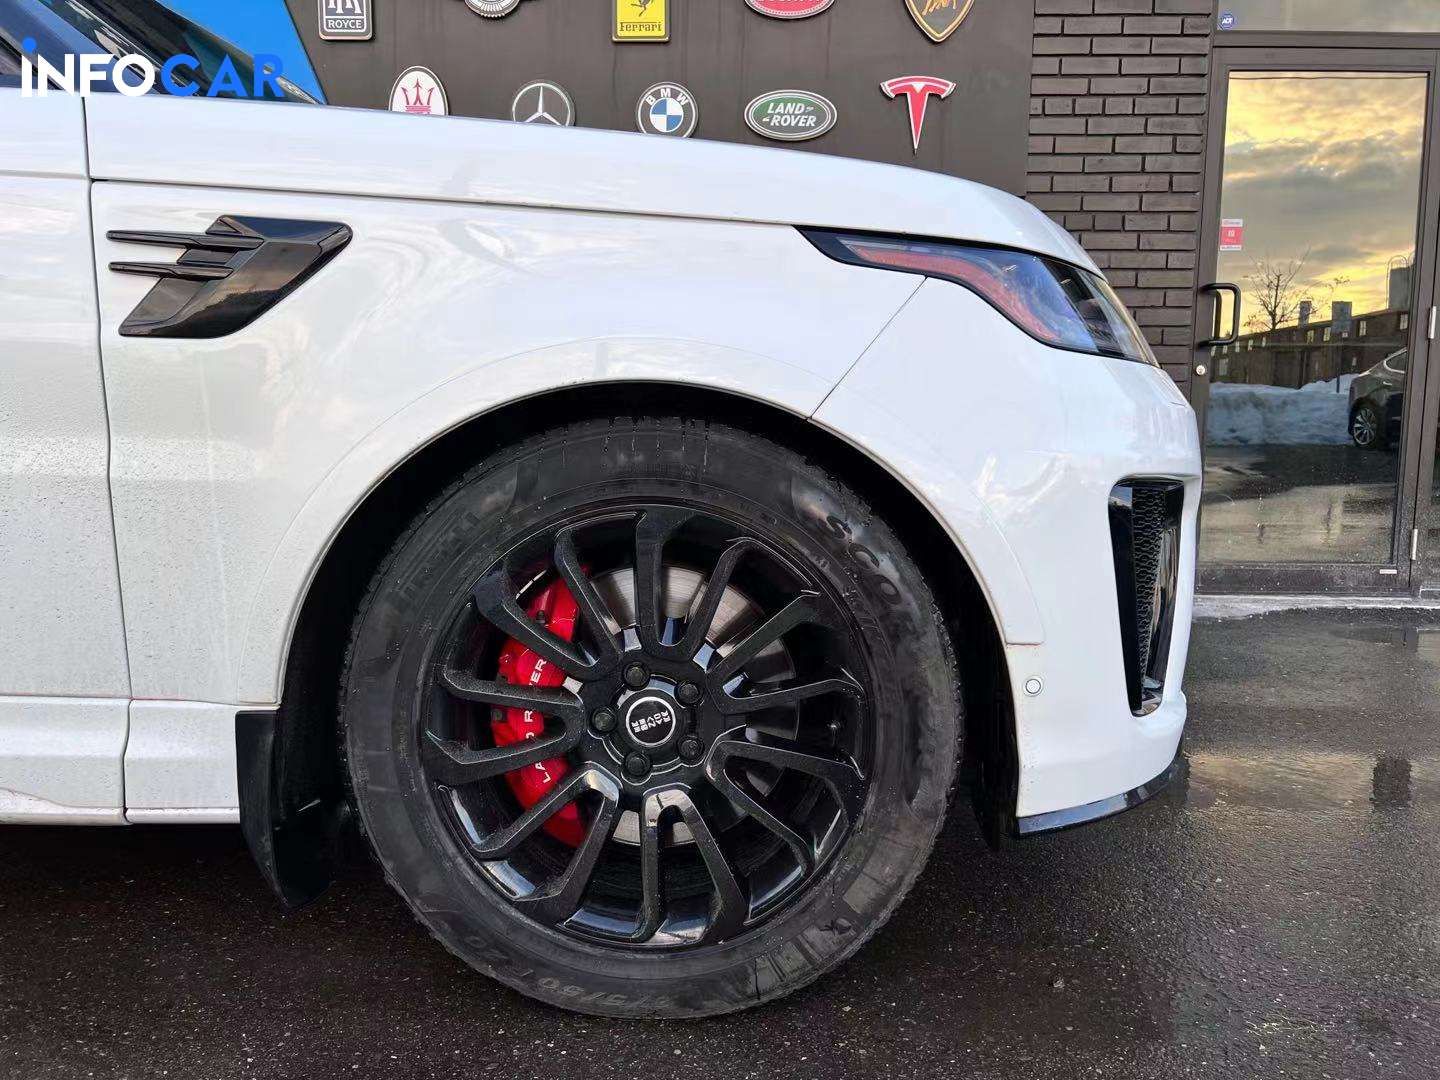 2018 Land Rover Range Rover Sport SVR - INFOCAR - Toronto Auto Trading Platform